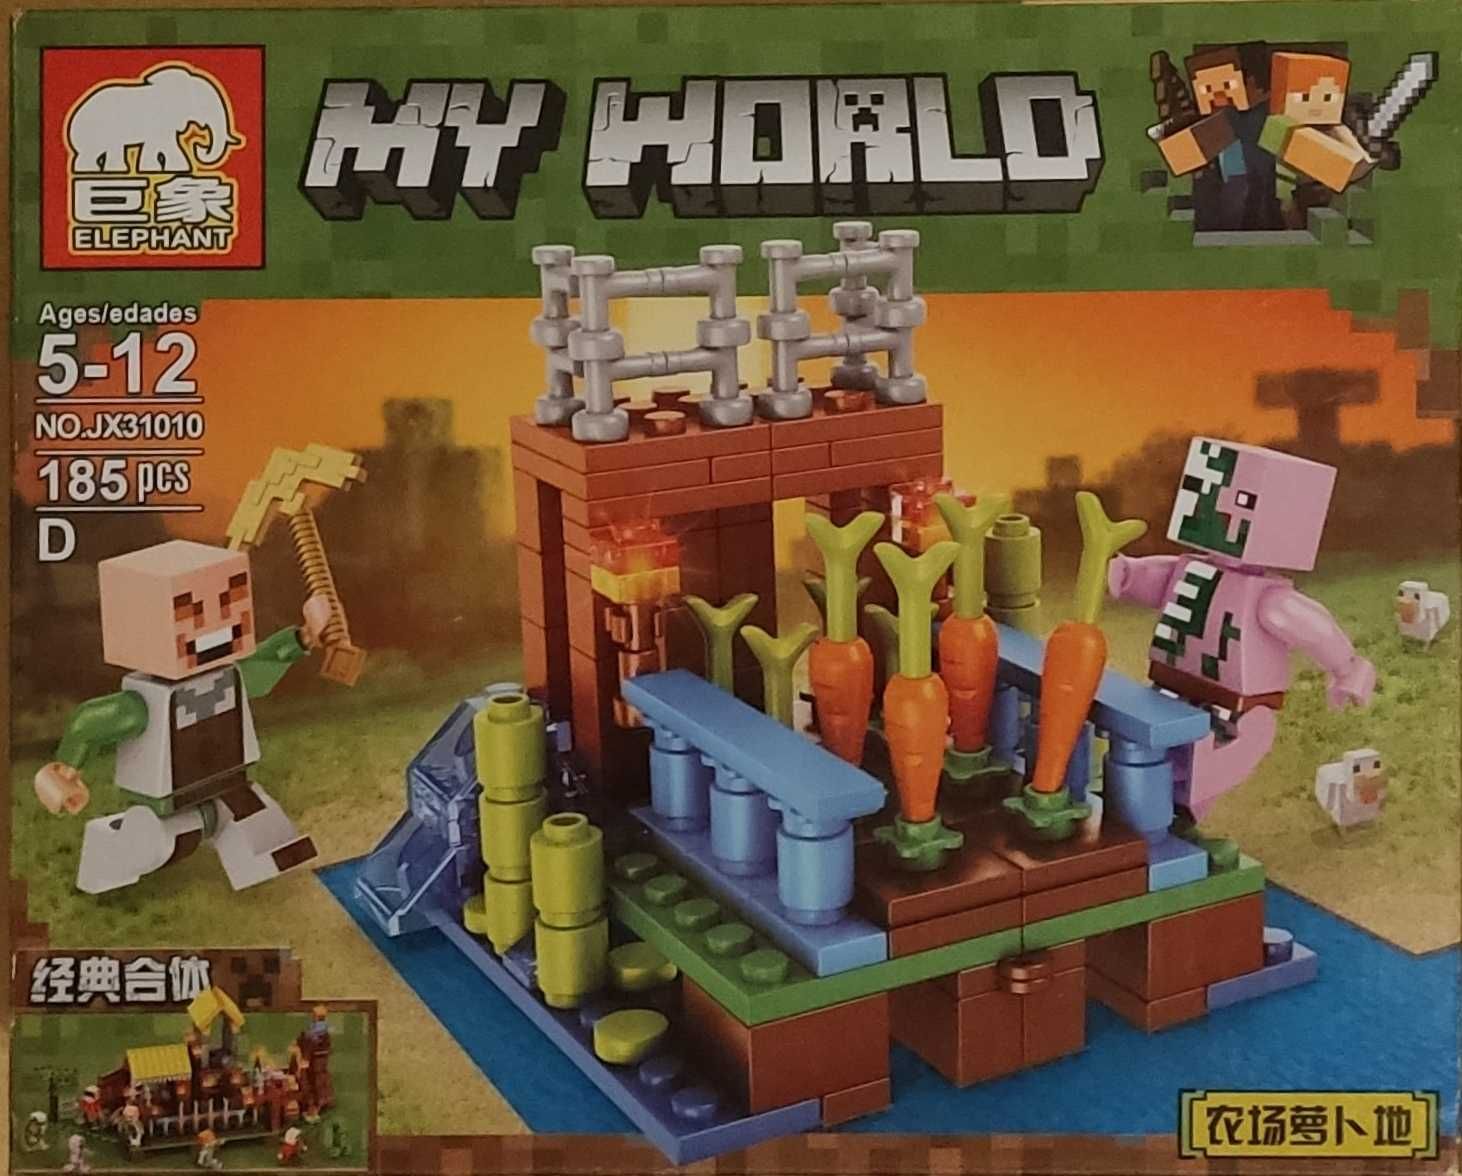 Klocki Minecraft 4 in 1, My World ogródek, domek i inne